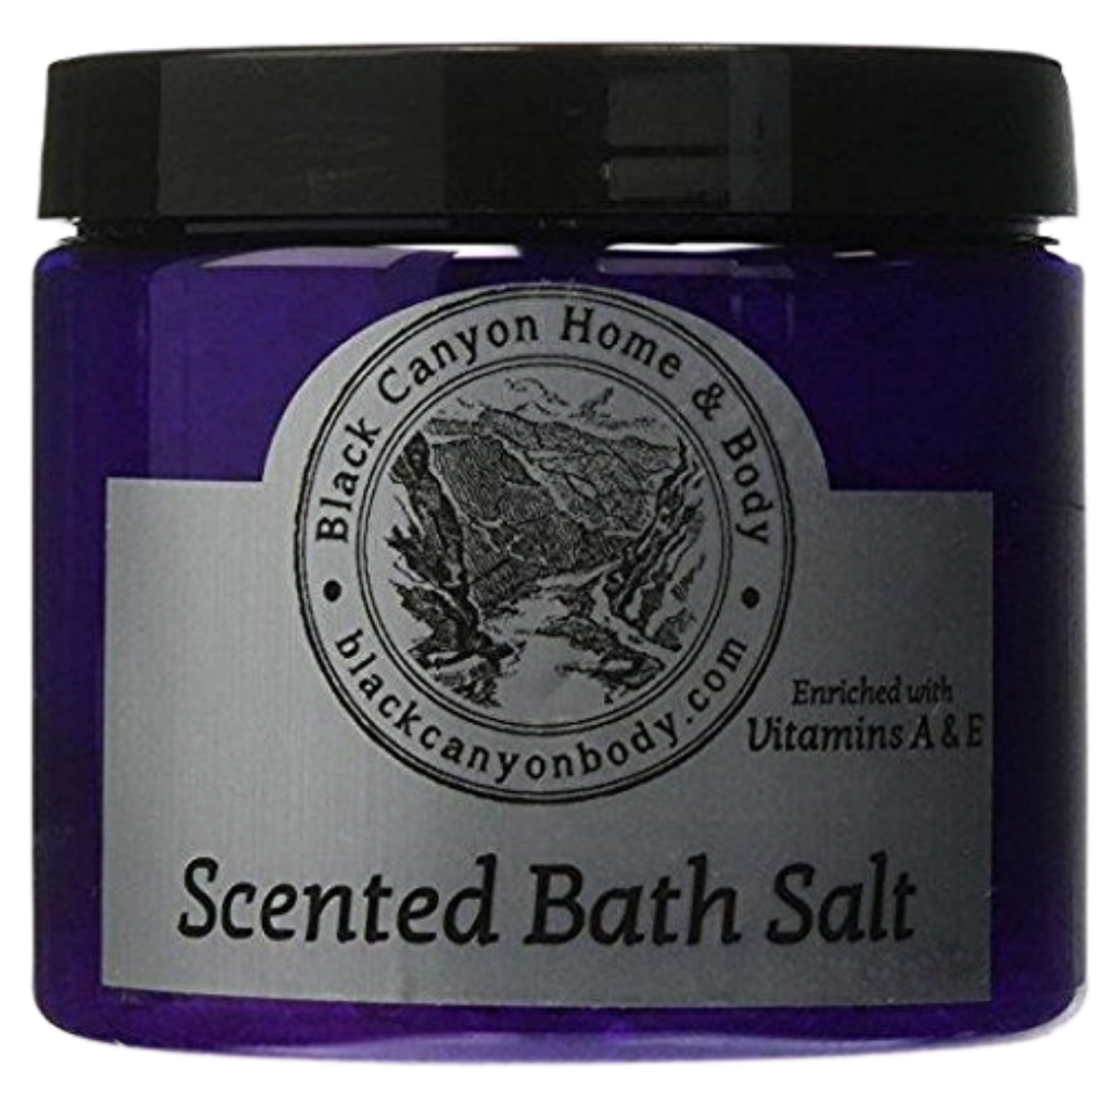 Black Canyon English Toffee Scented Sea Salt Bath Soak by Black Canyon Home & Body